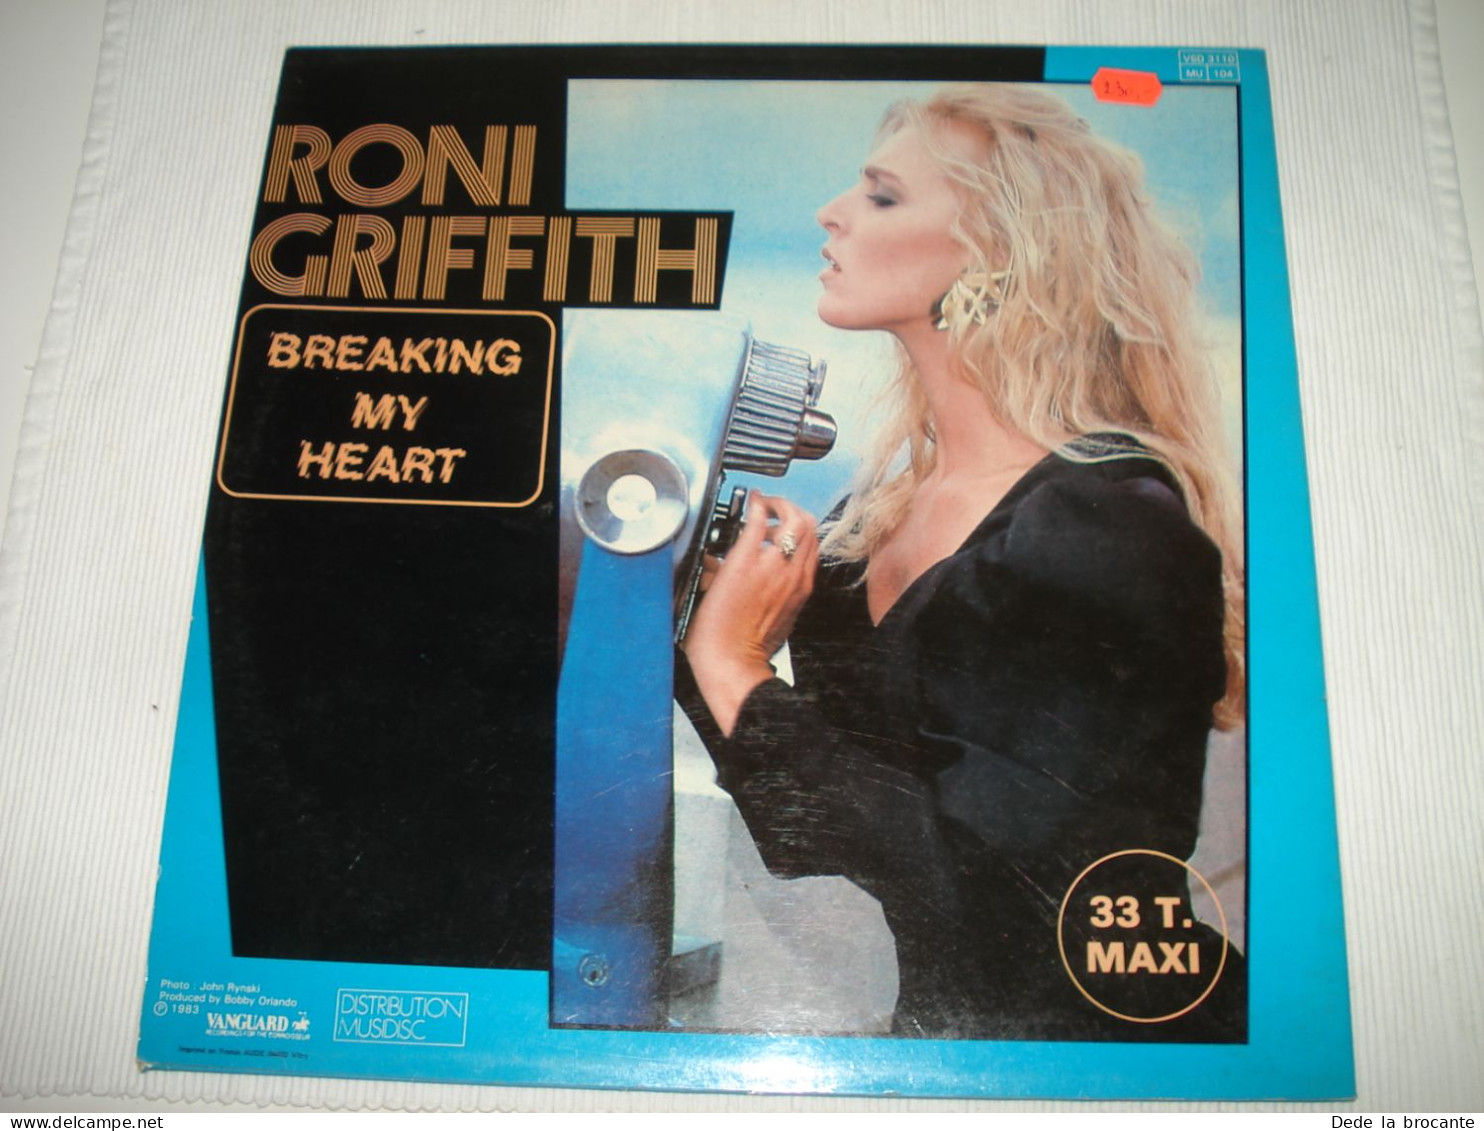 B8 / Roni Griffith – Breaking My Heart - Maxi Single 33T - VSD 3110 - FR - 1983 - Formati Speciali